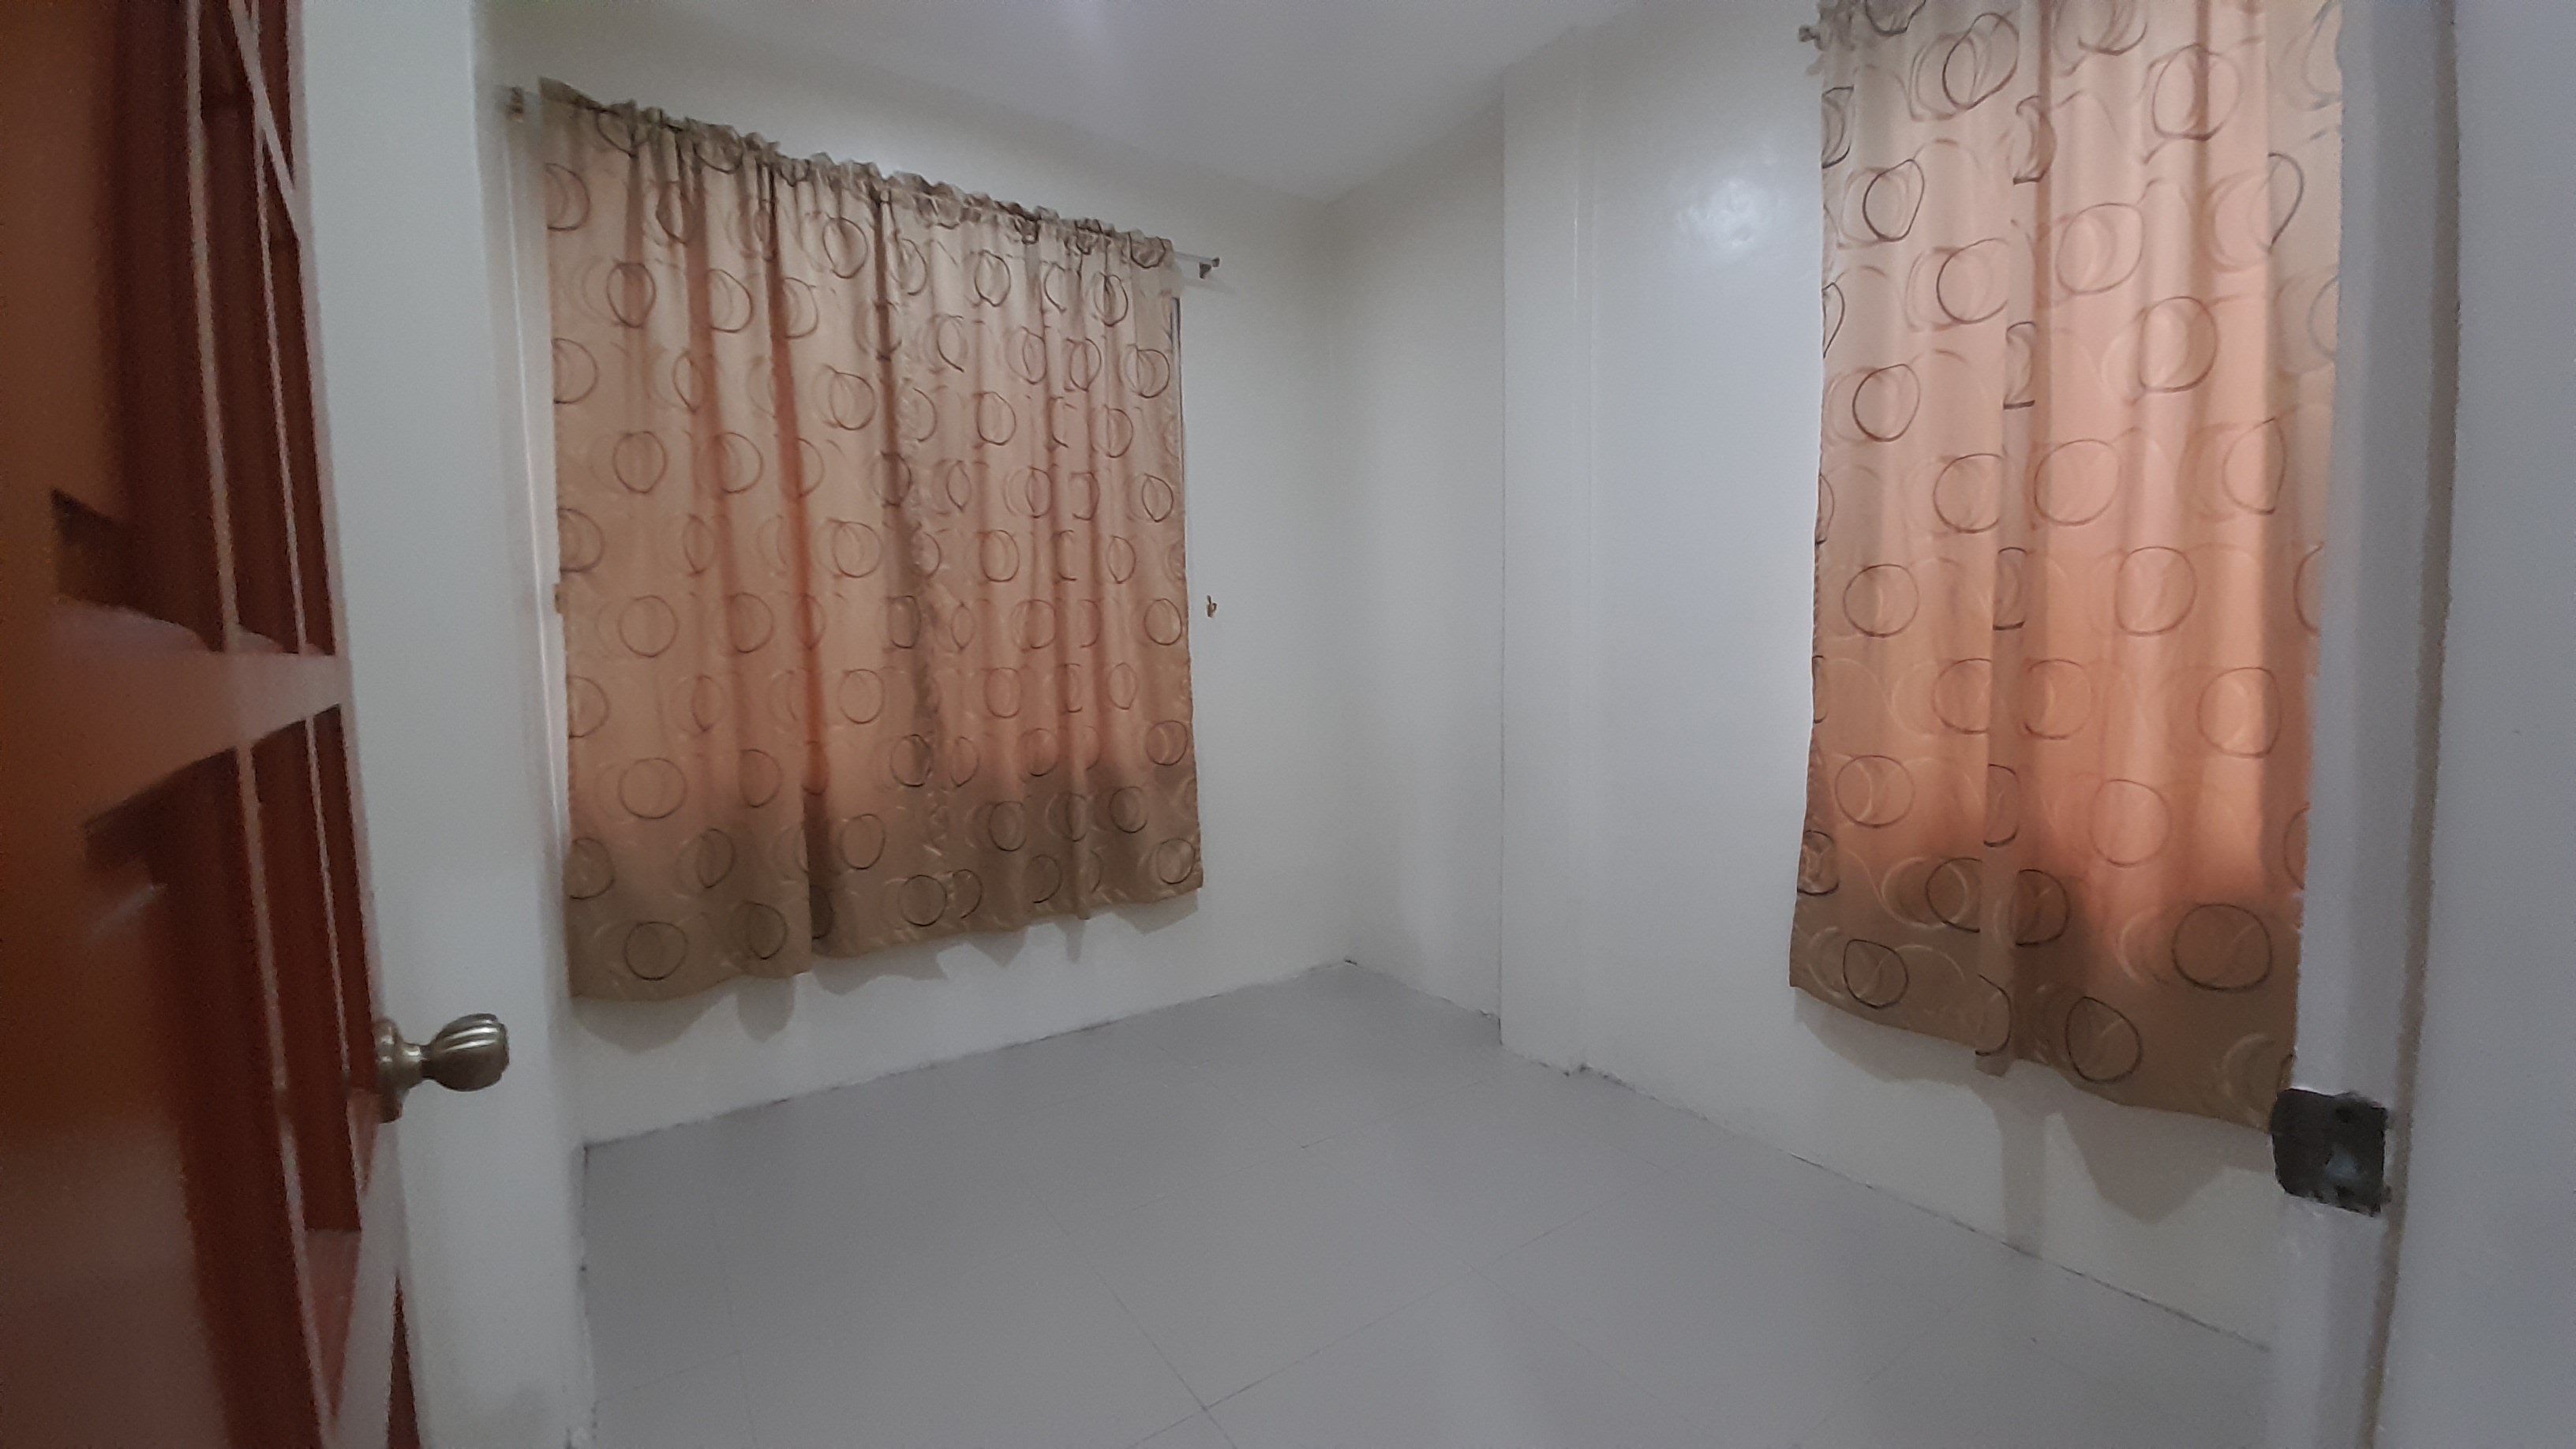 4-bedroom-semi-furnished-bungalow-house-in-banilad-cebu-city